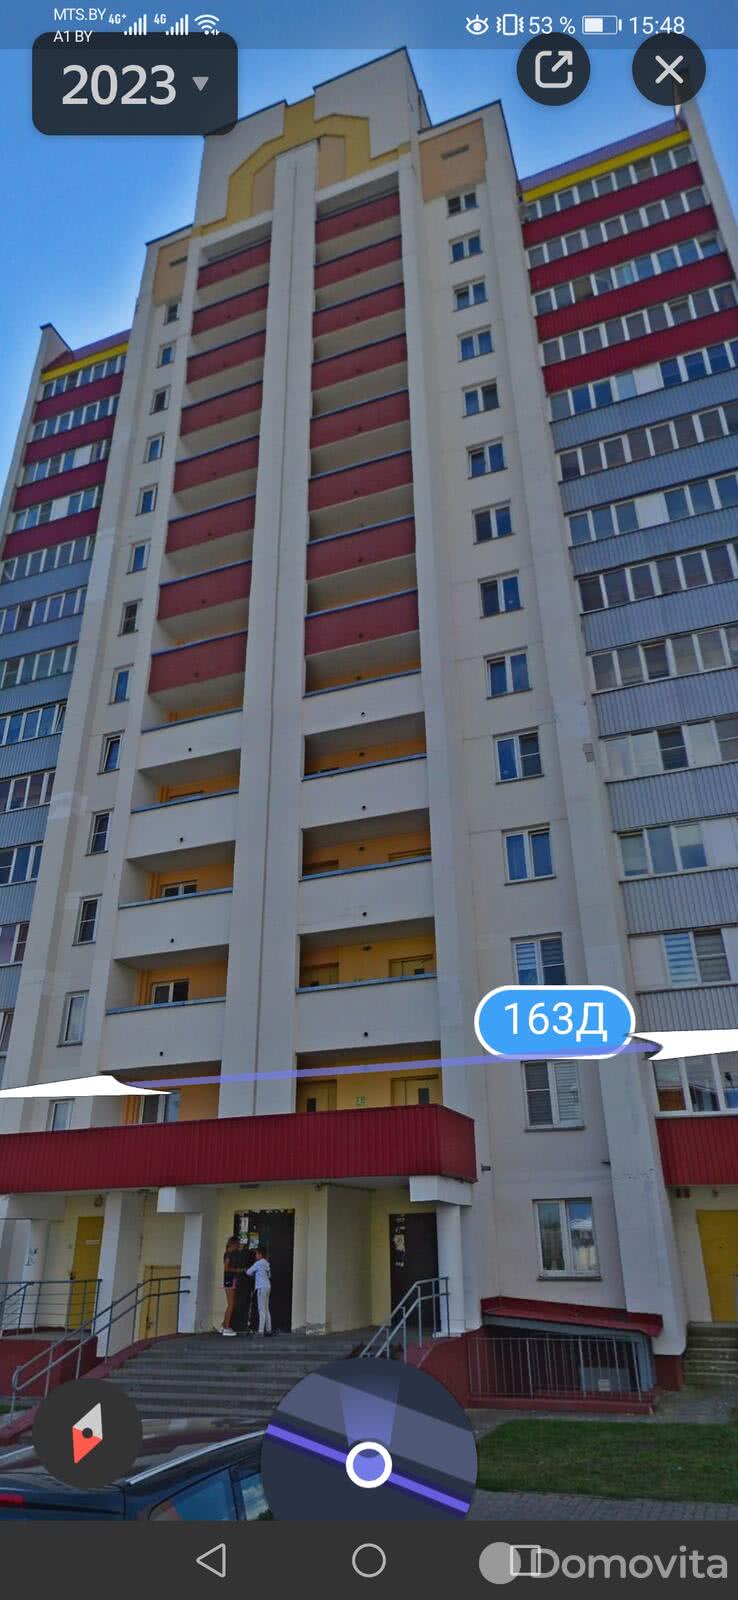 Цена продажи квартиры, Гомель, ул. Ильича, д. 163Д